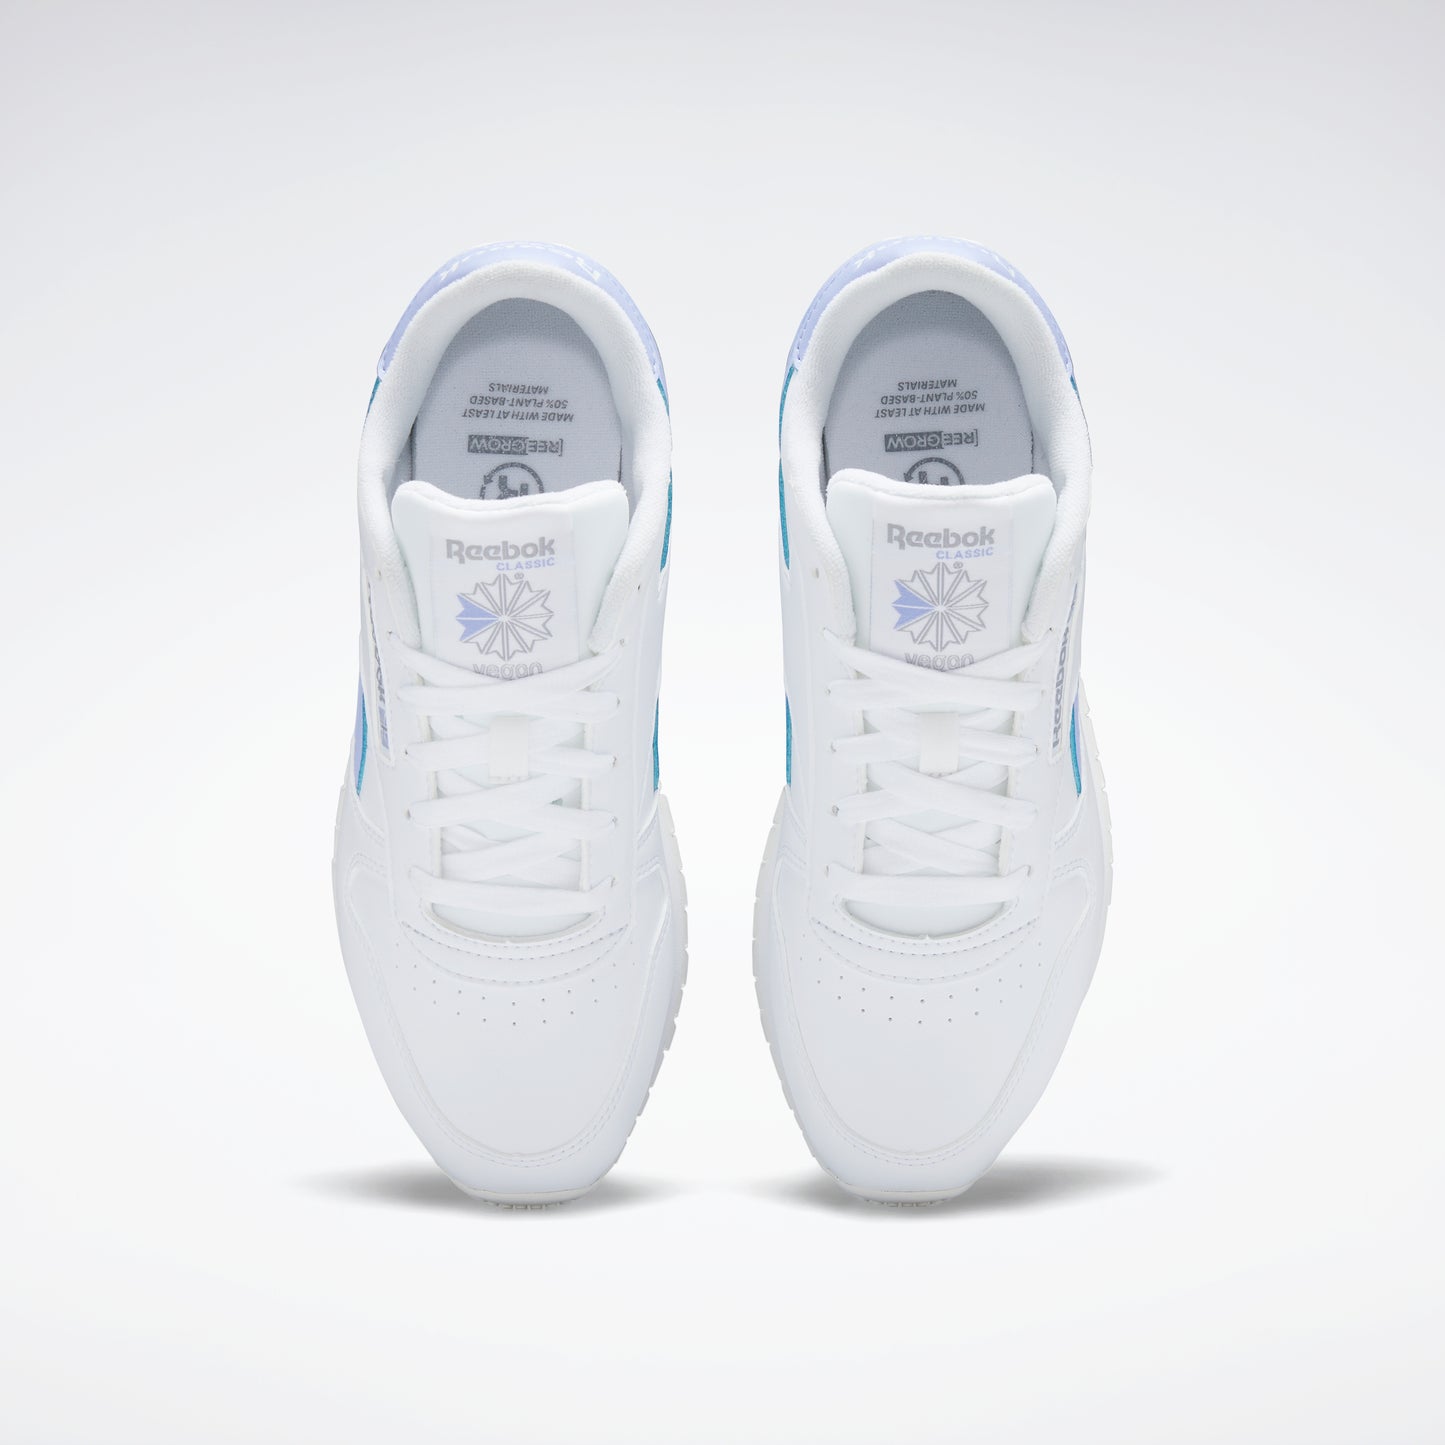 Reebok Footwear Women Classic Leather Shoes Ftwr White/Ftwr White/Lilac Gl